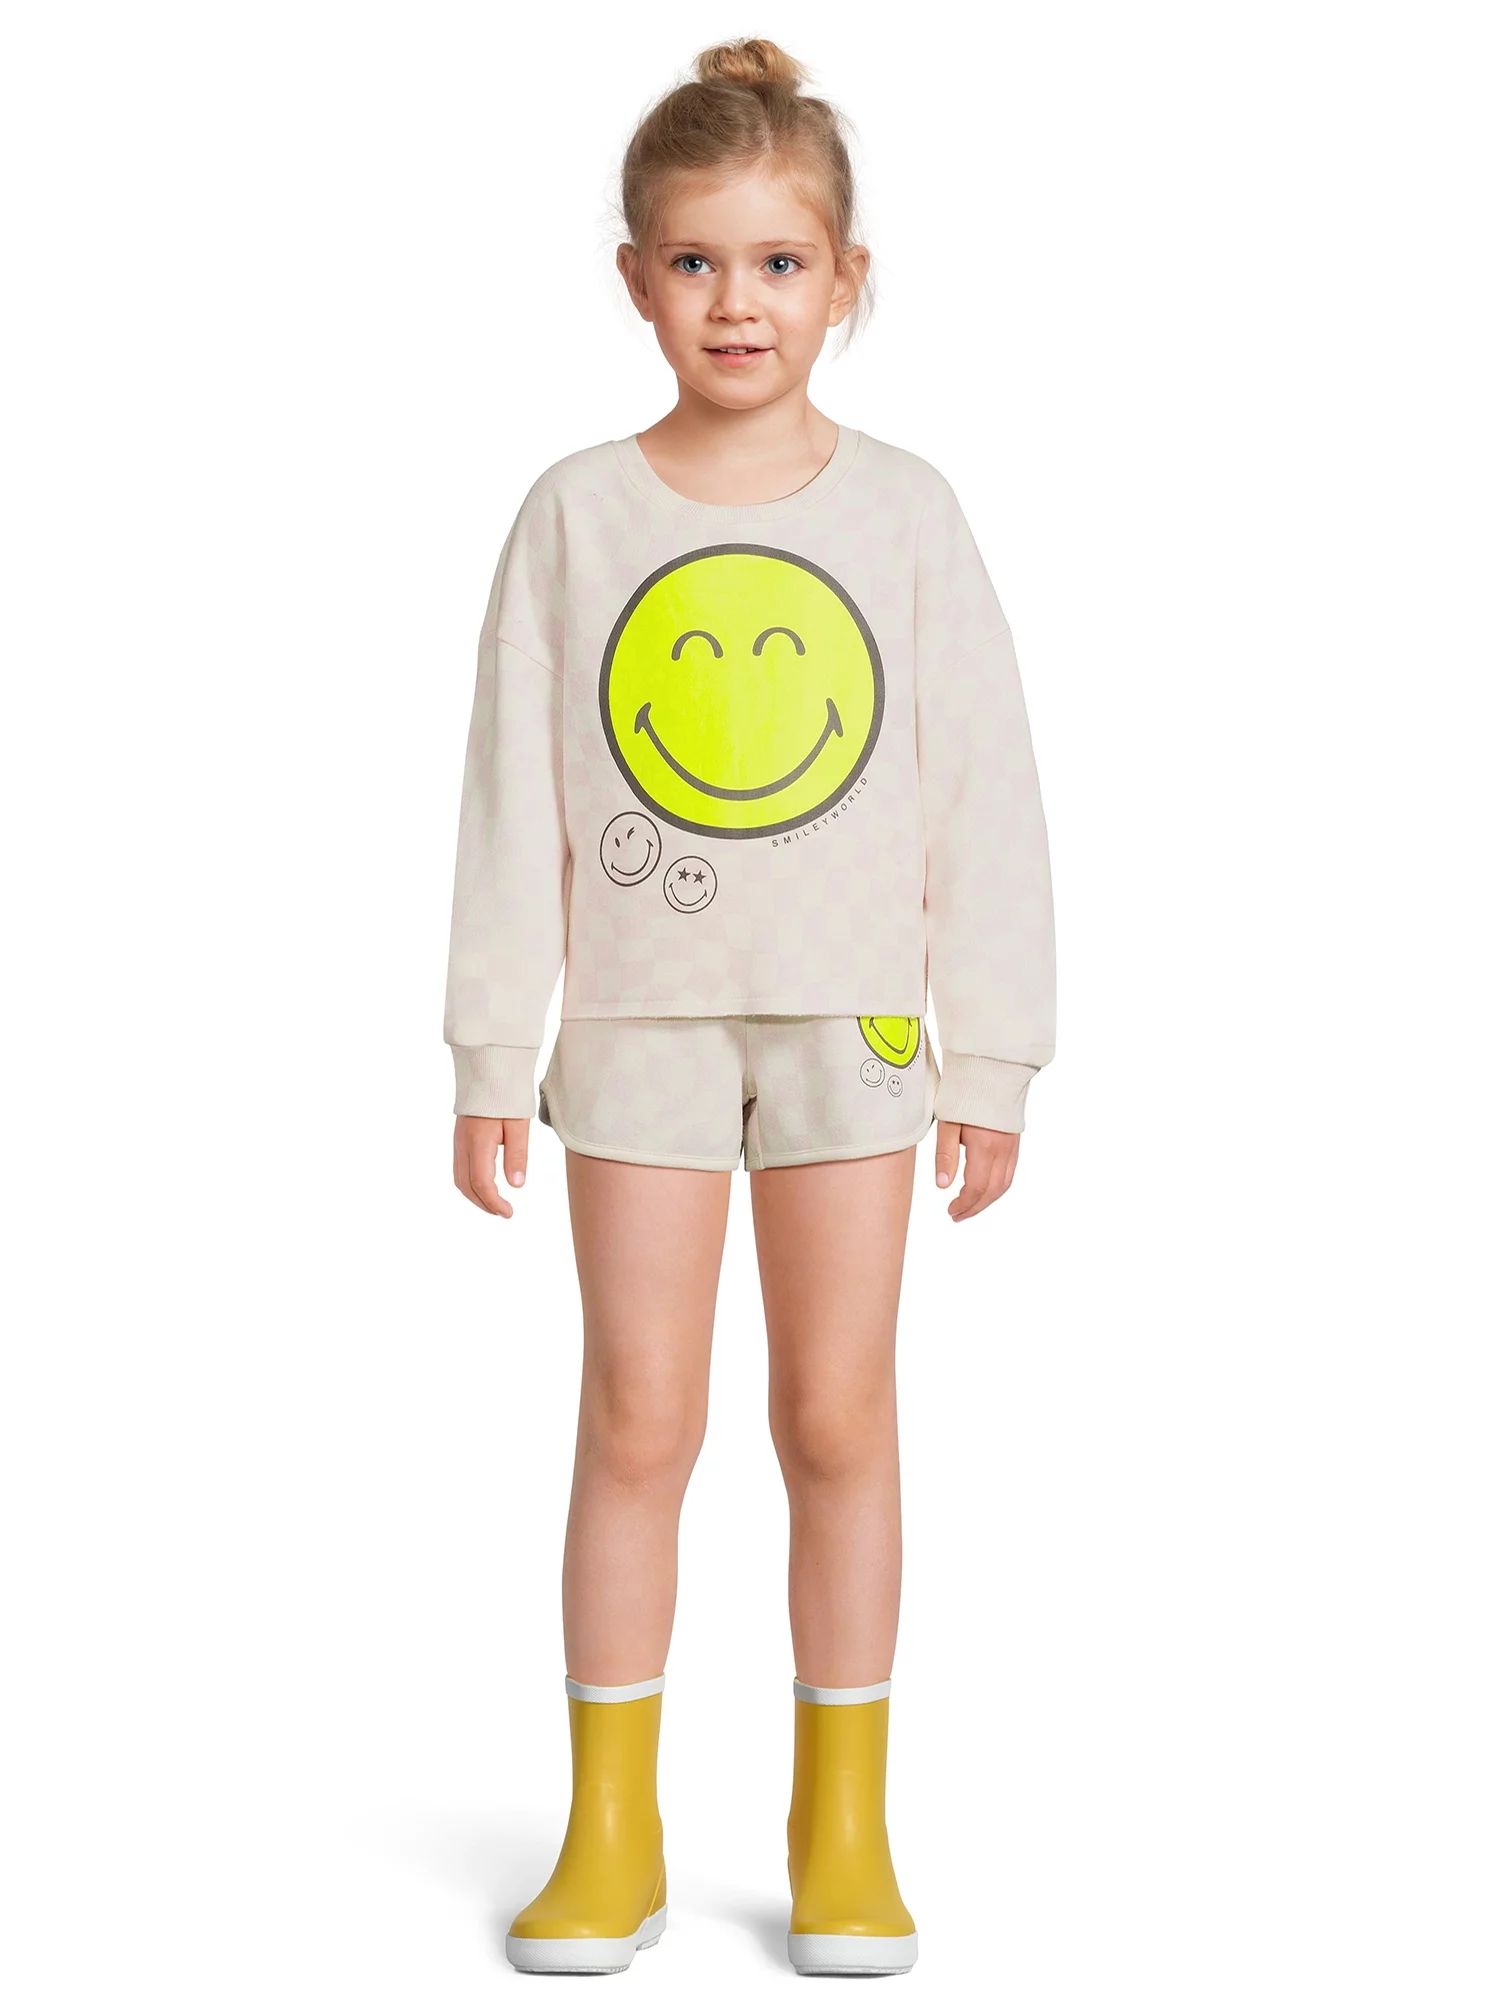 Grayson Social Girls Smiley Fleece Sweatshirt and Shorts Set, Sizes XS (4/5)-XXL (18) | Walmart (US)